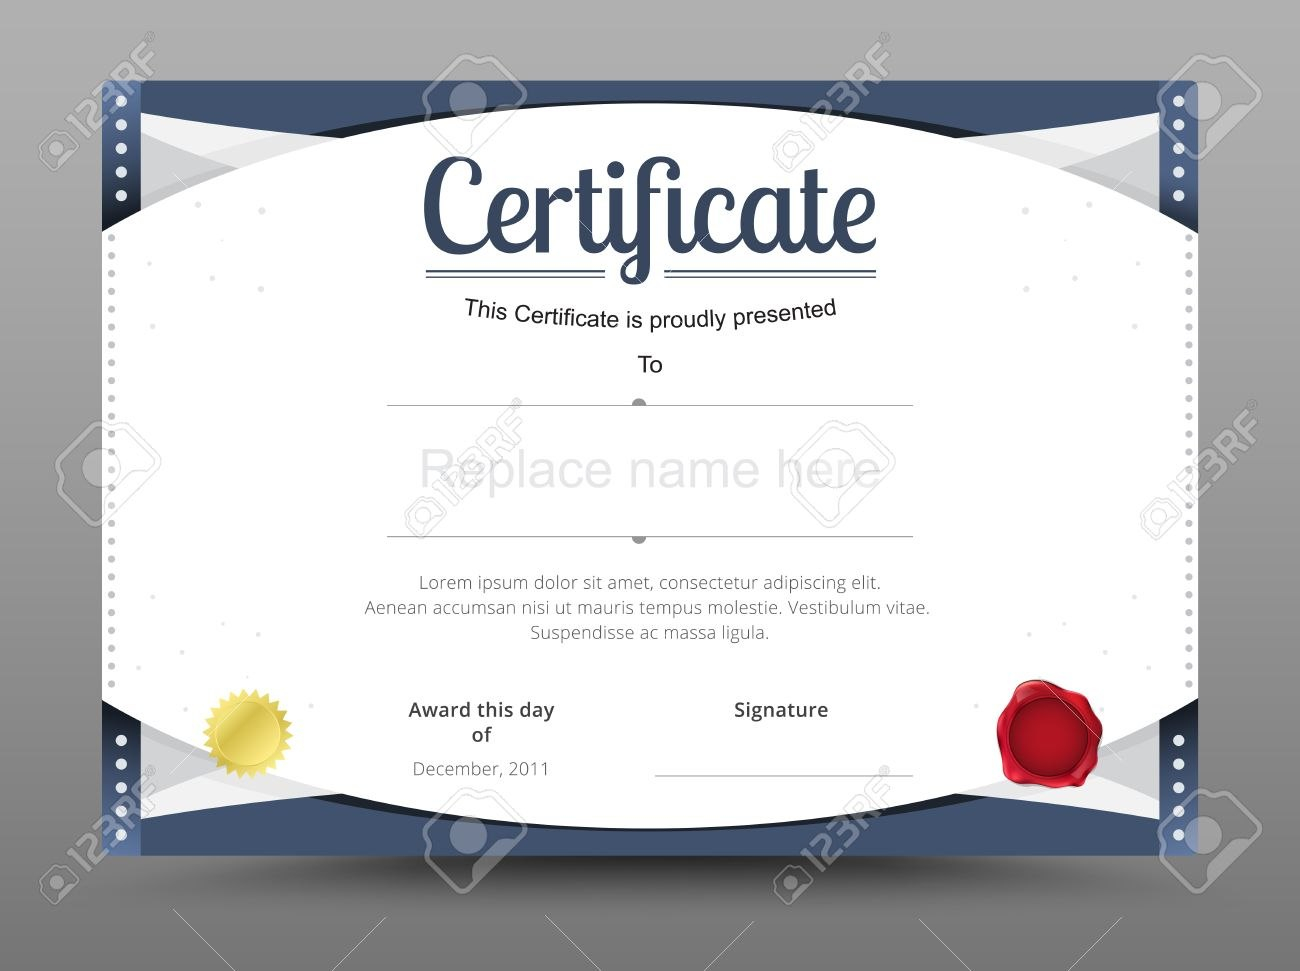 Elegant Certificate Template Business Certificate Formal Theme pertaining to Elegant Certificate Templates Free